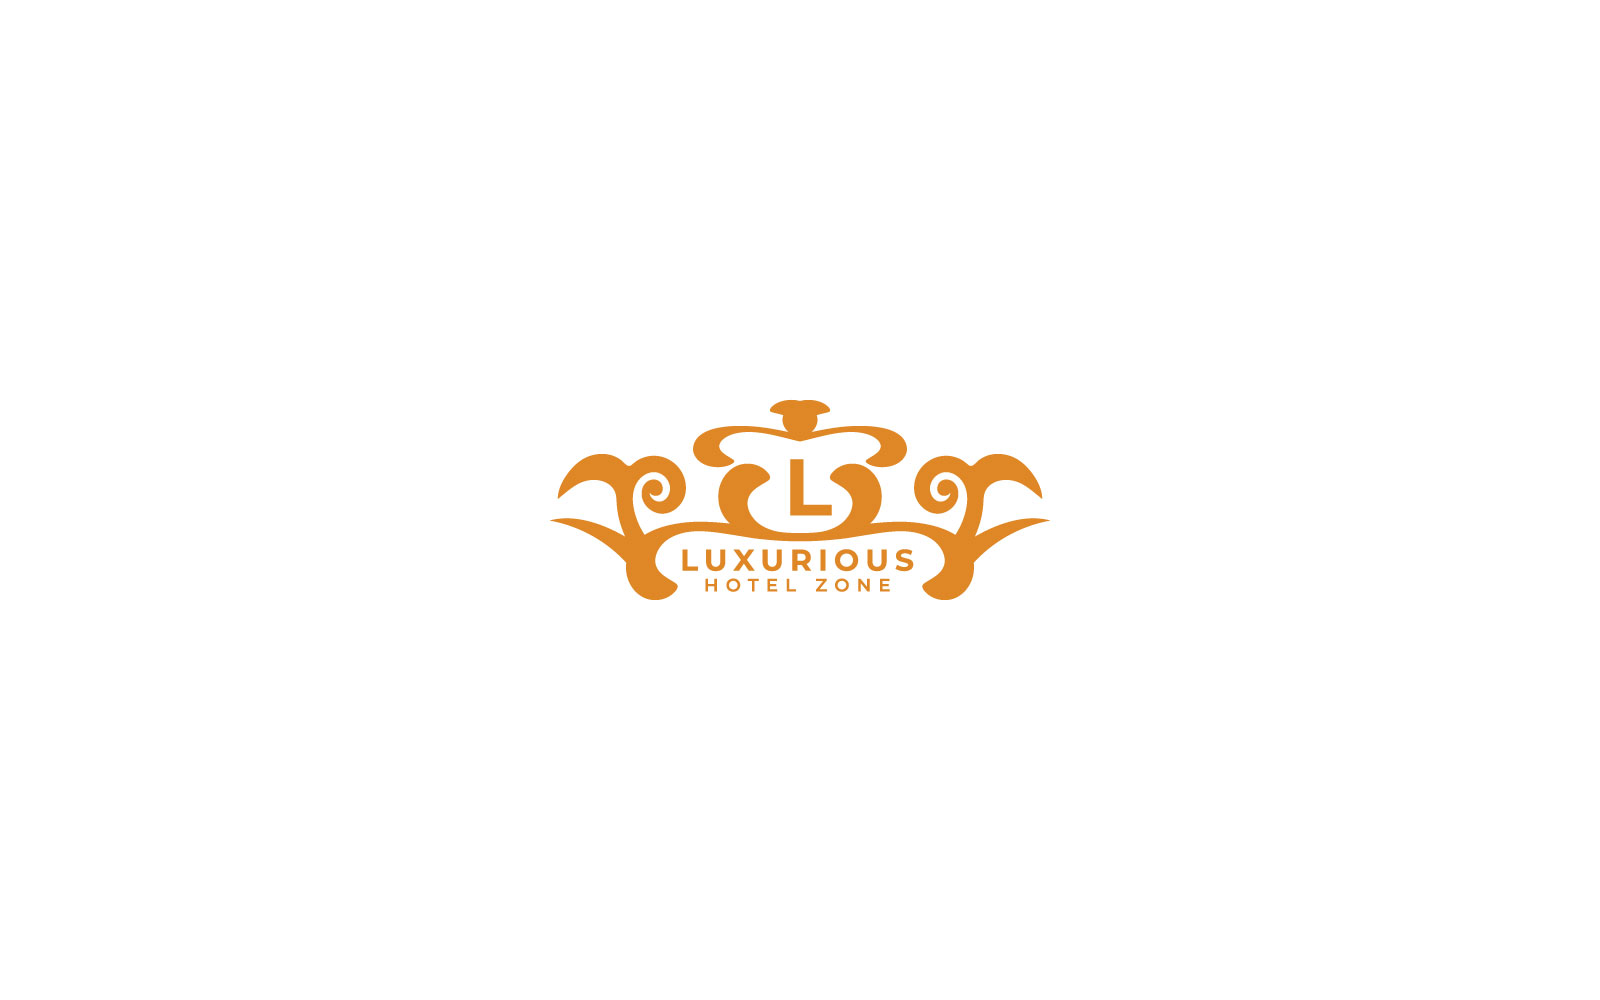 Luxurious Hotel Zone Logo Template